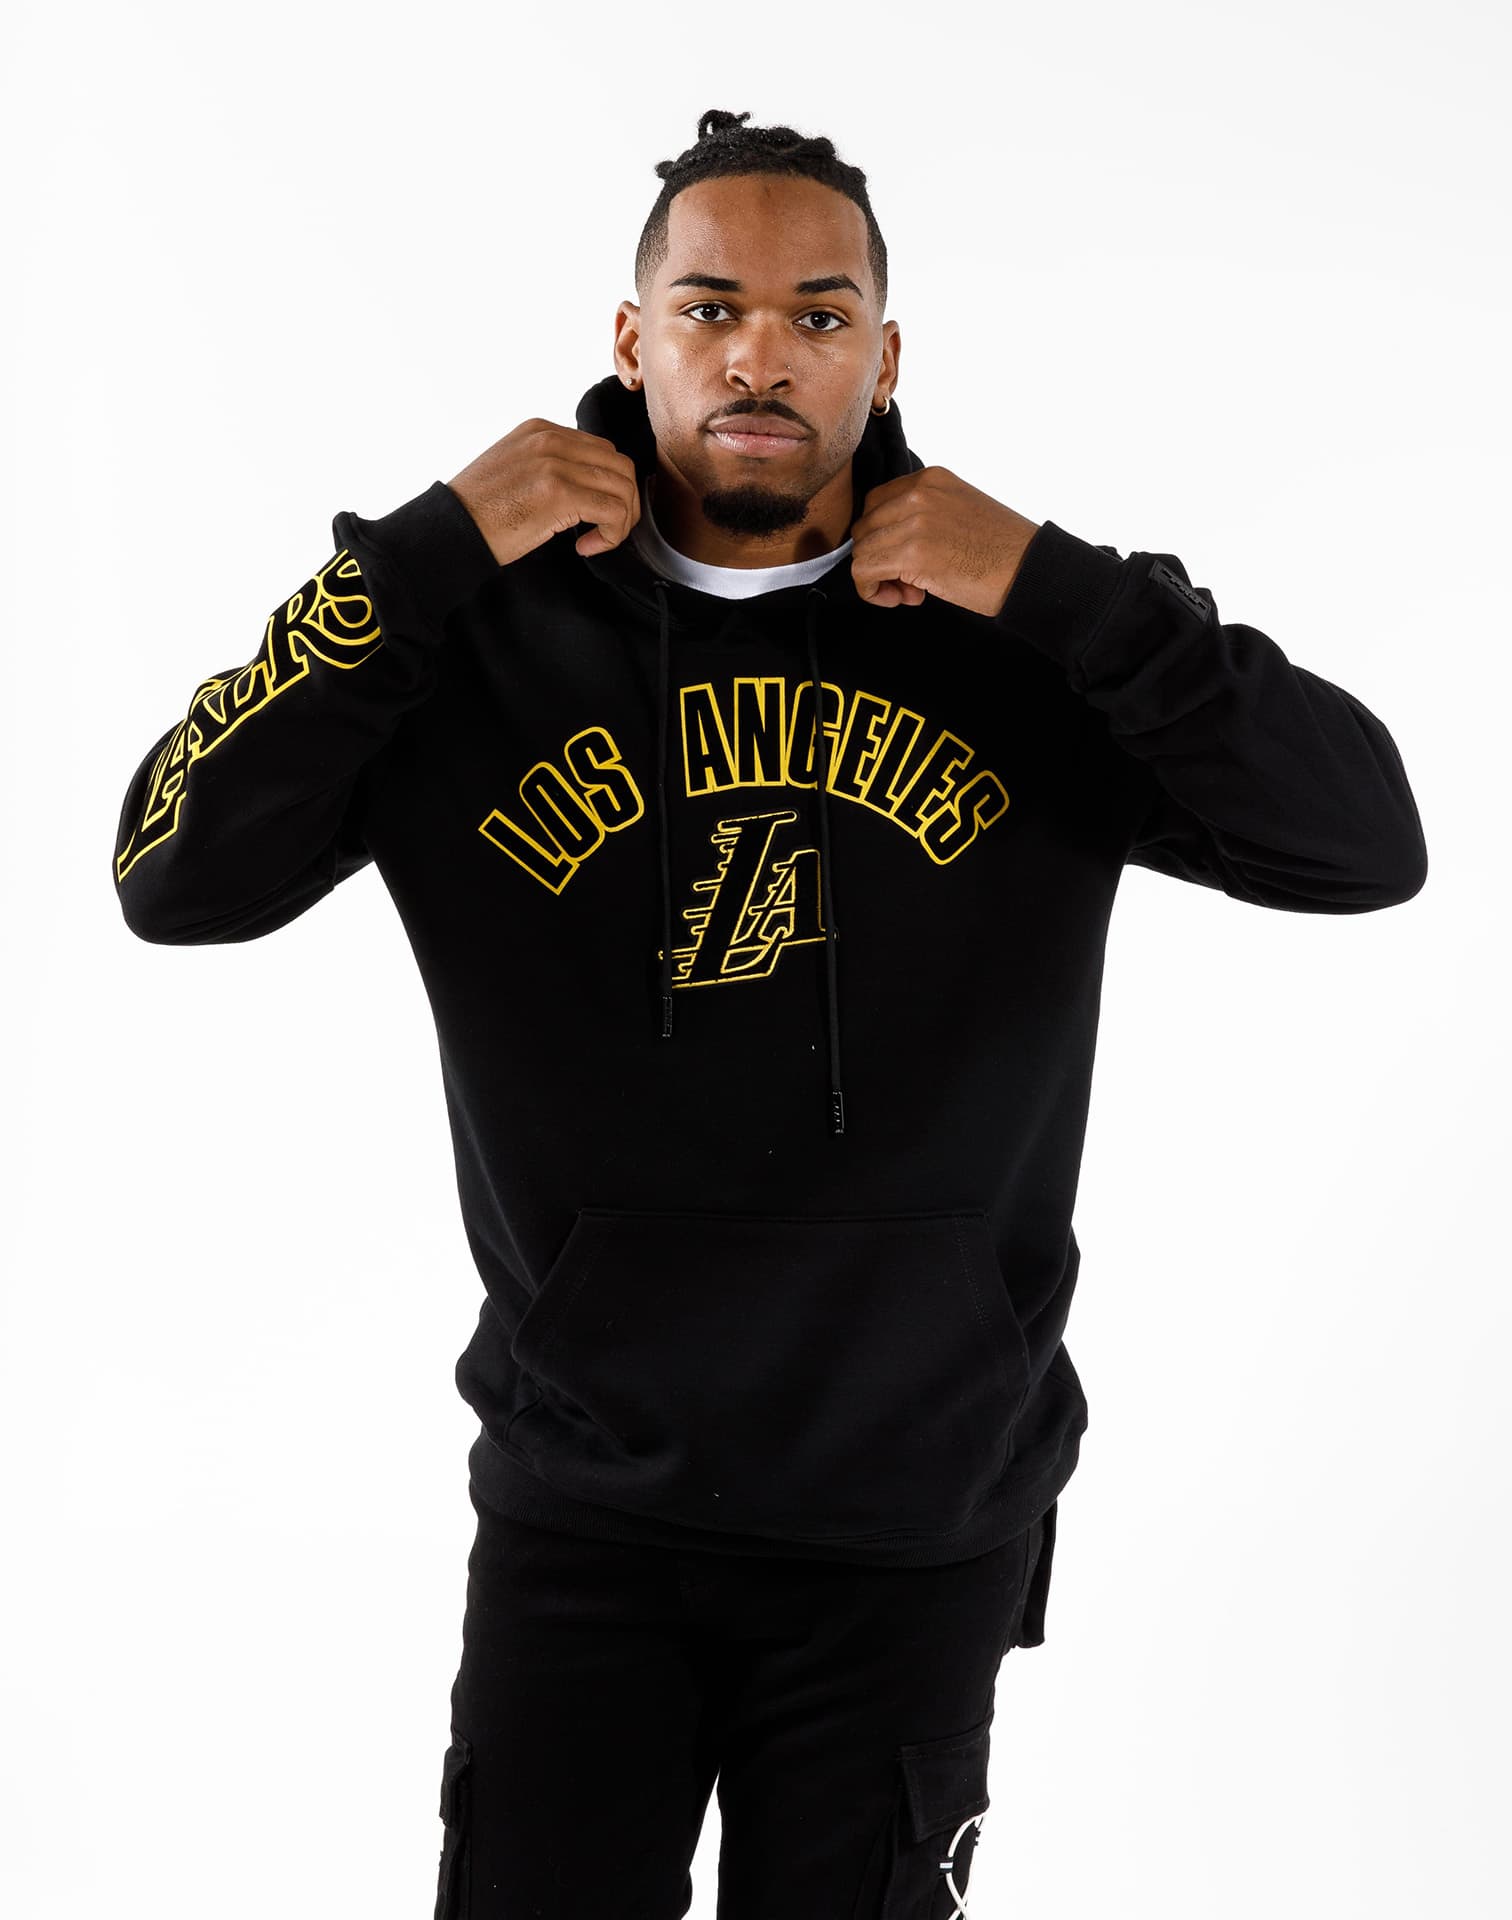 Mitchell & Ness sweatshirt Los Angeles Lakers NBA Gold Team Logo Hoody black